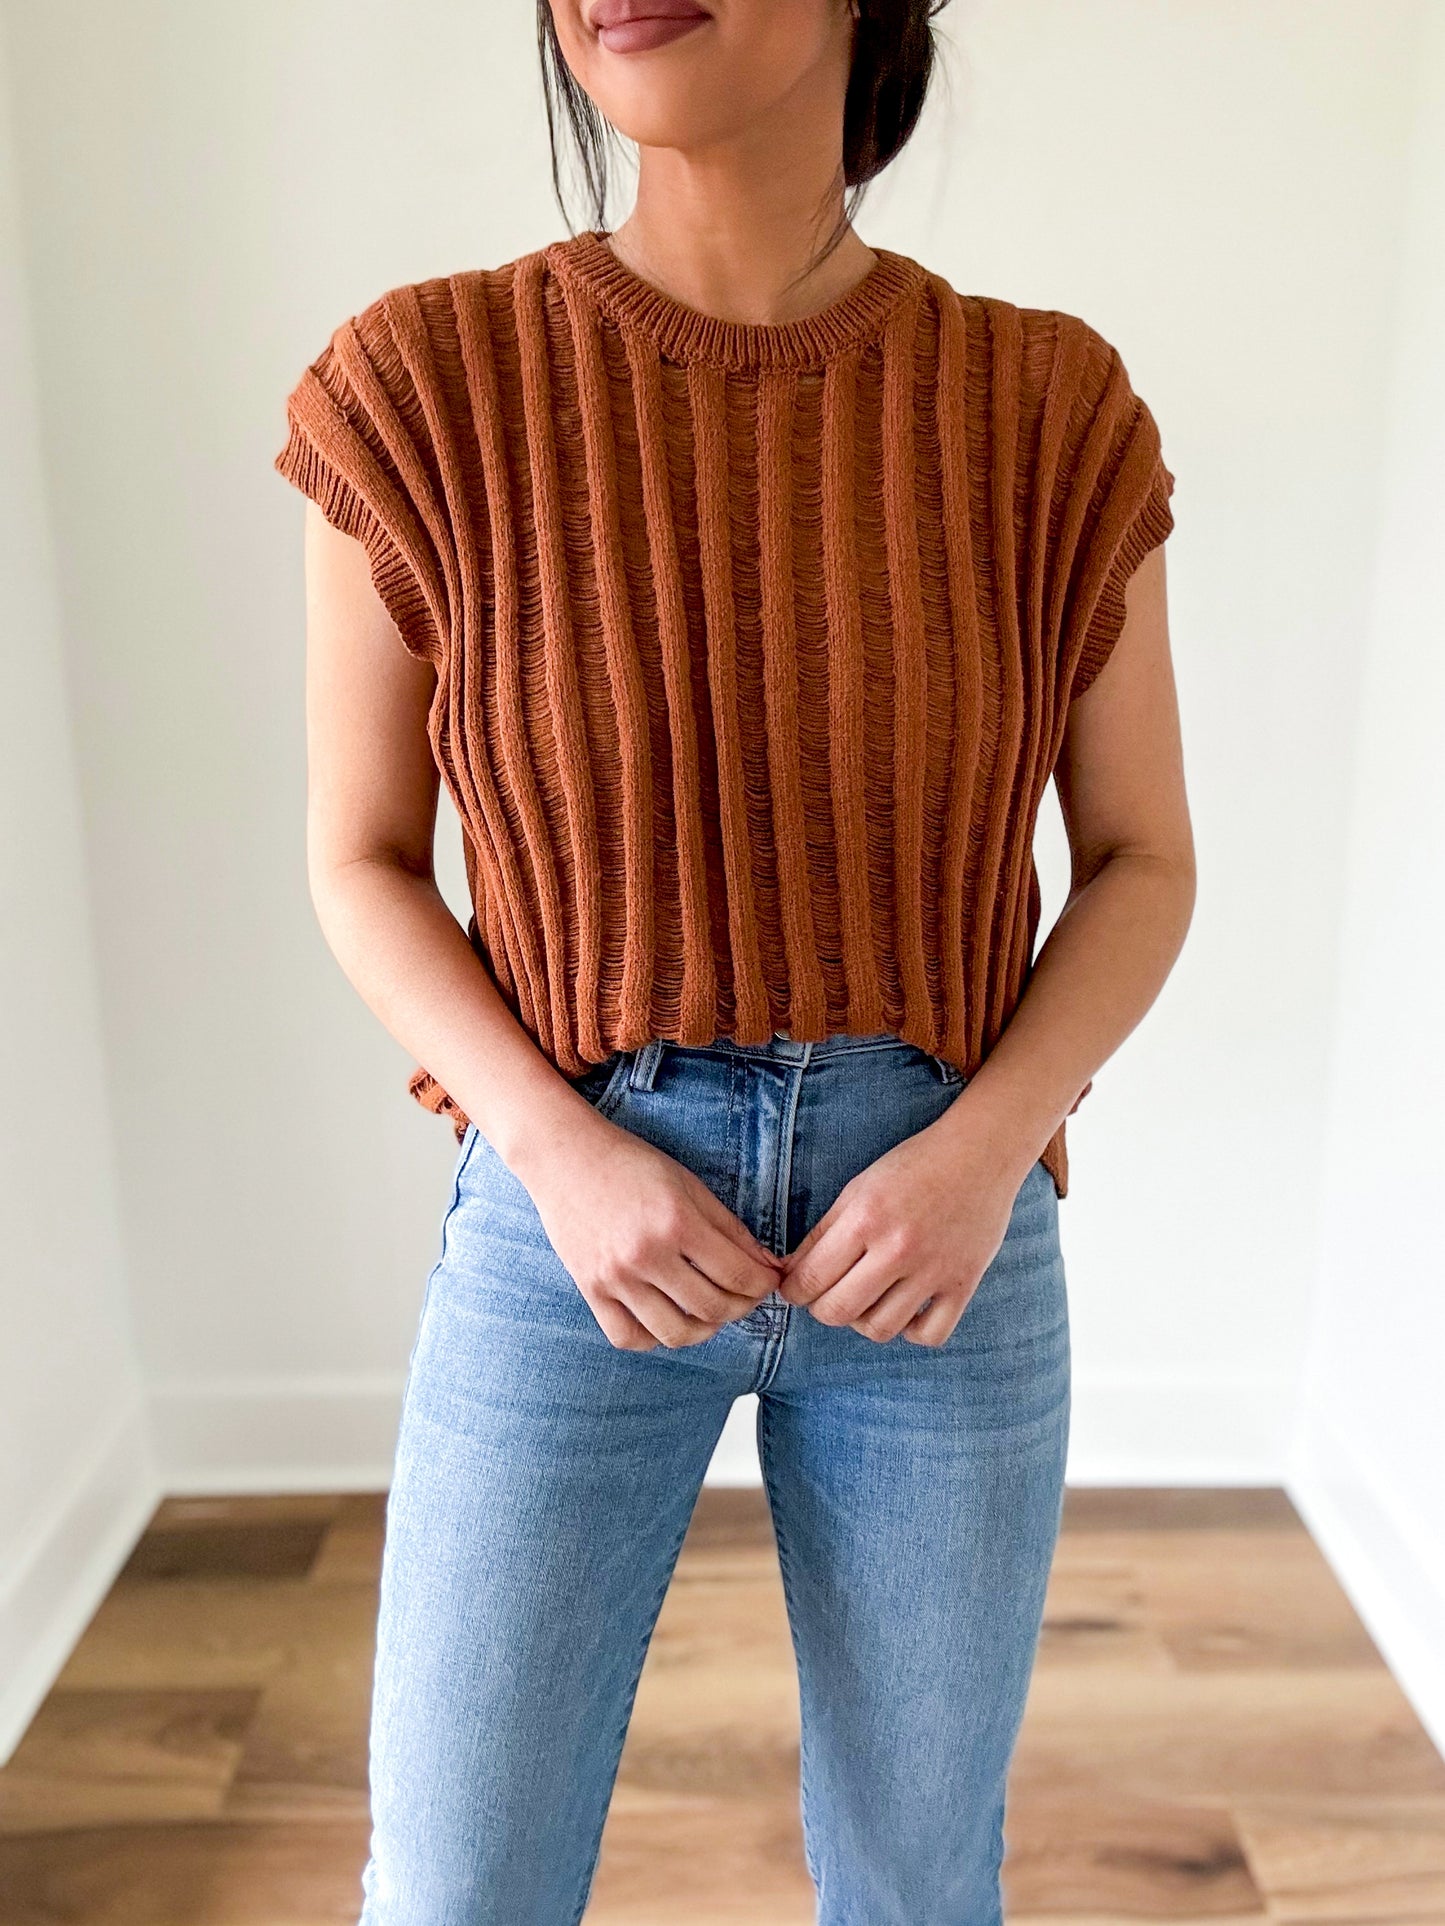 Cinnamon Sweater Top